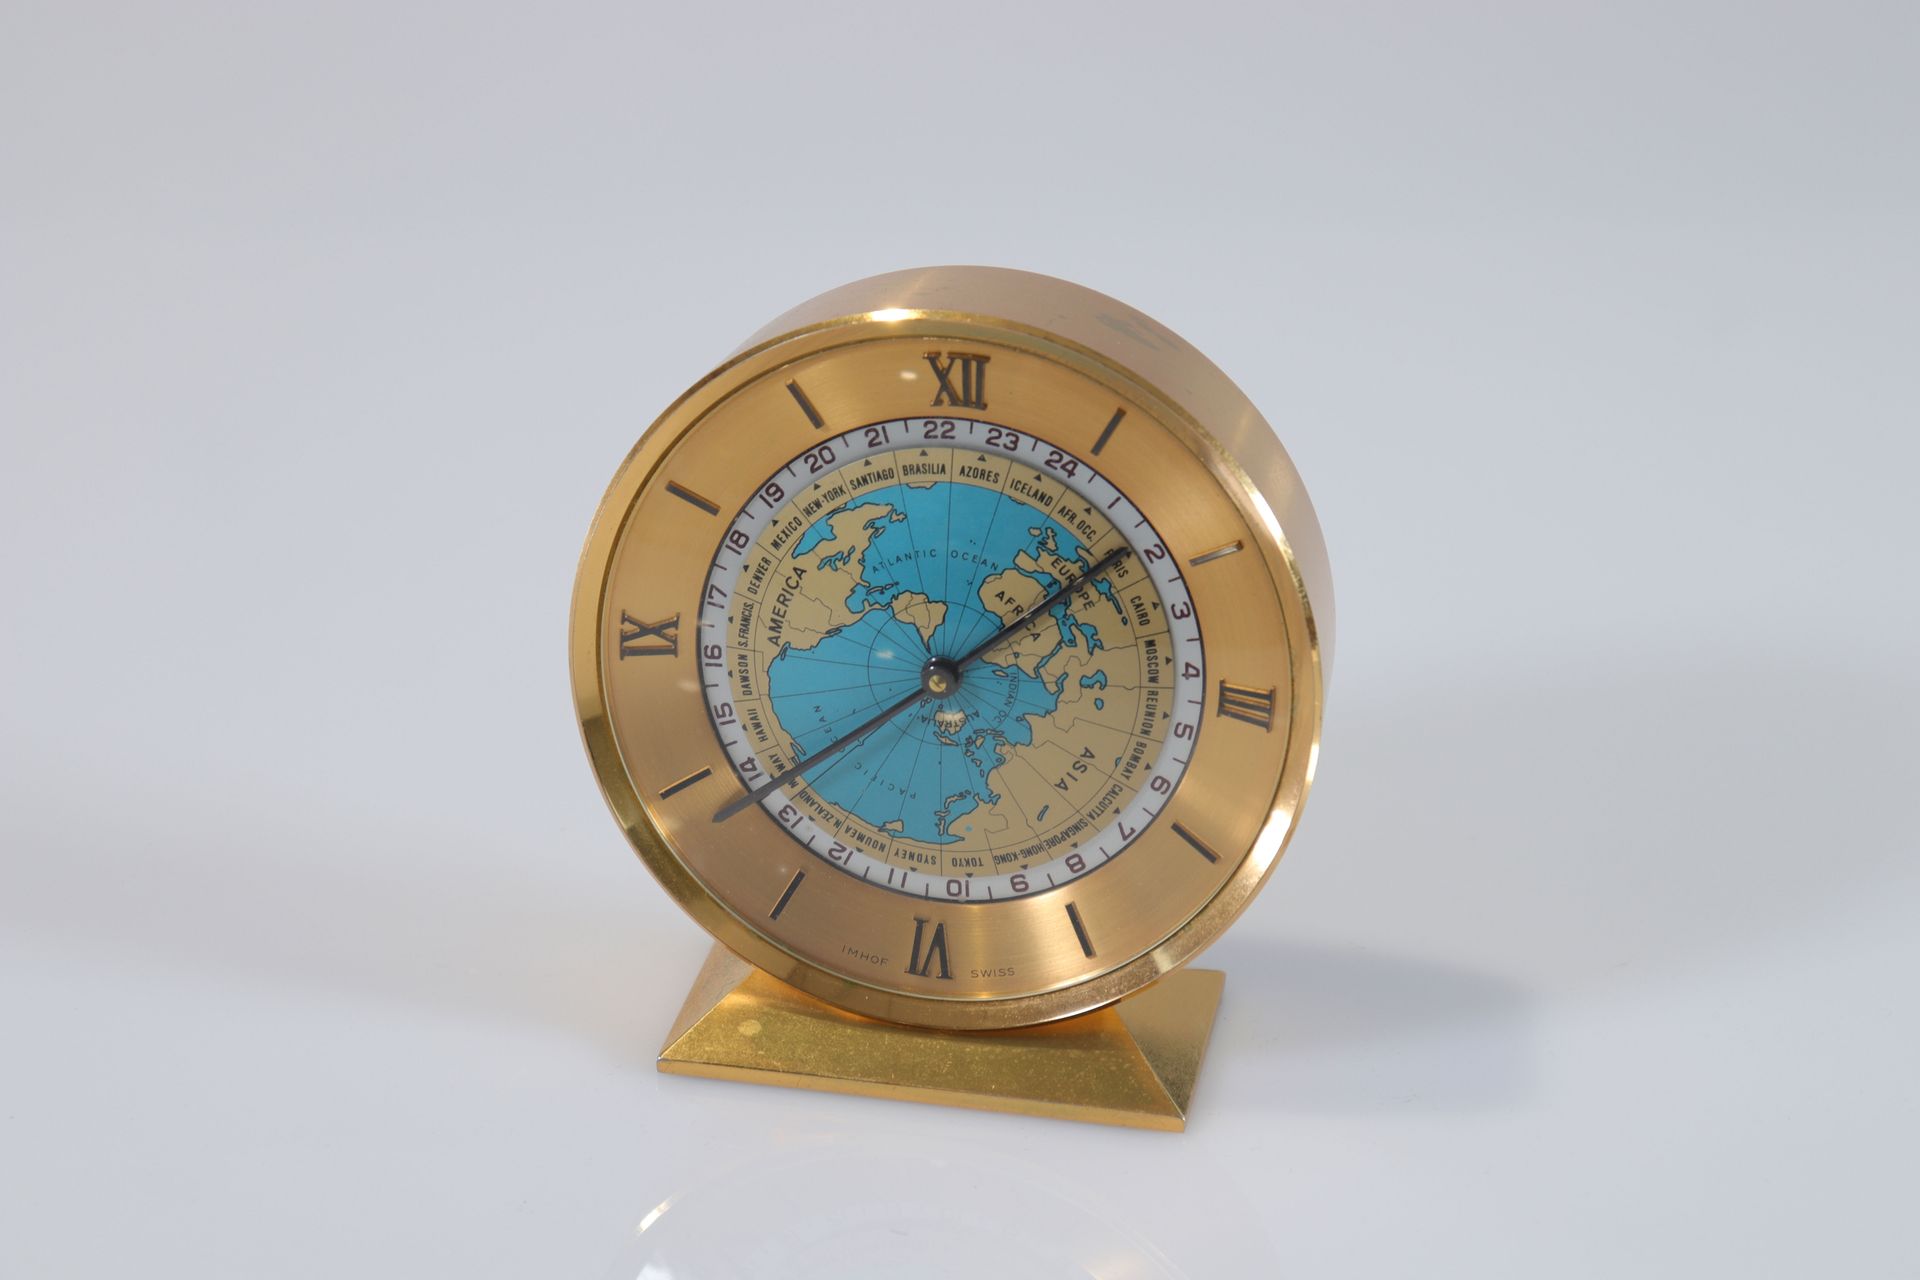 Suisse - Horloge Imhoff - 1960 Suiza - Reloj Imhoff - 1960
Periodo: 20º 
Dimensi&hellip;